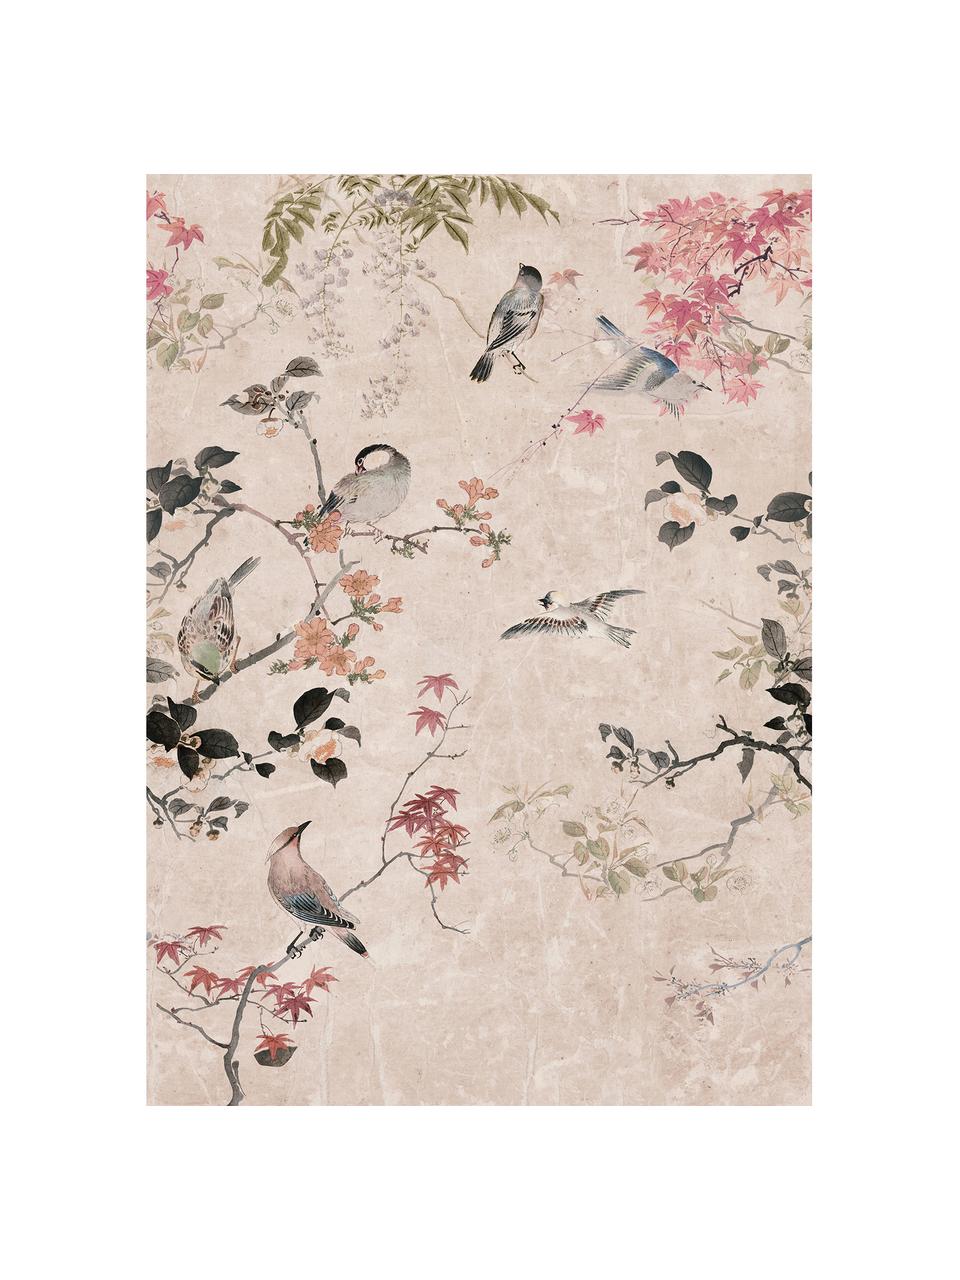 Fototapete Japanese Garden, Vlies, Rosa, Mehrfarbig, 200 x 280 cm